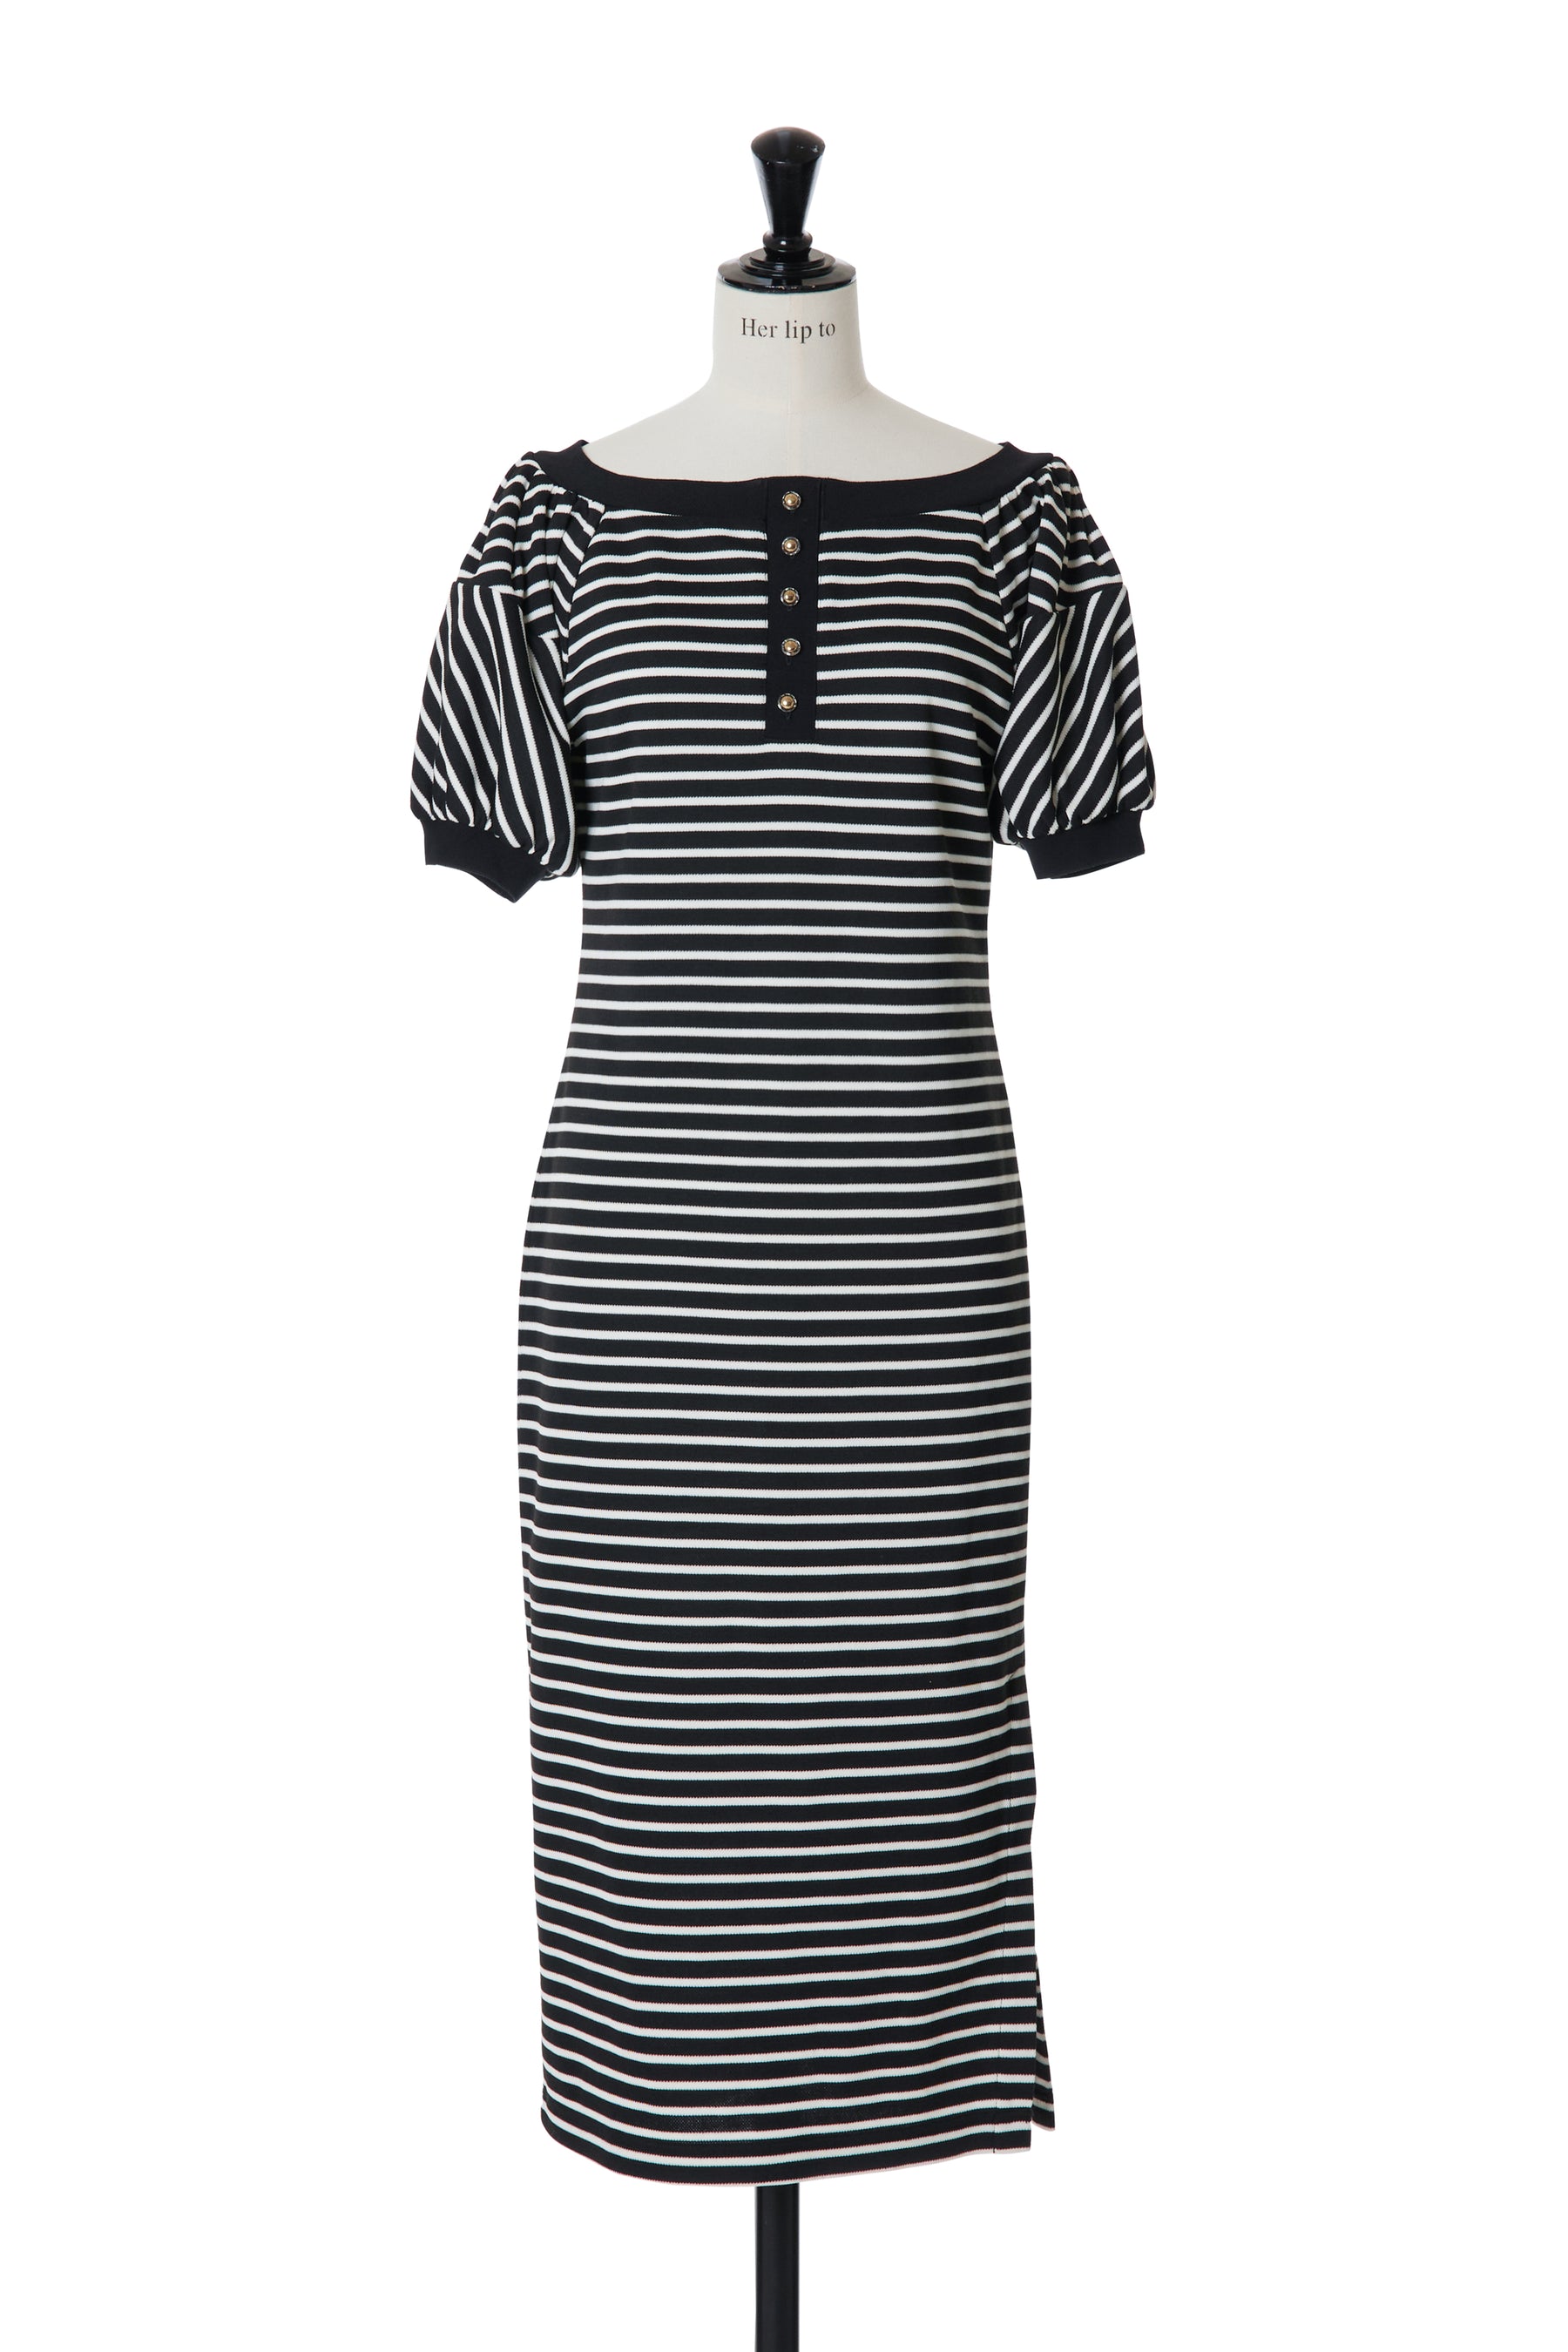 Herlipto Saint-Tropez Striped Long Dress-